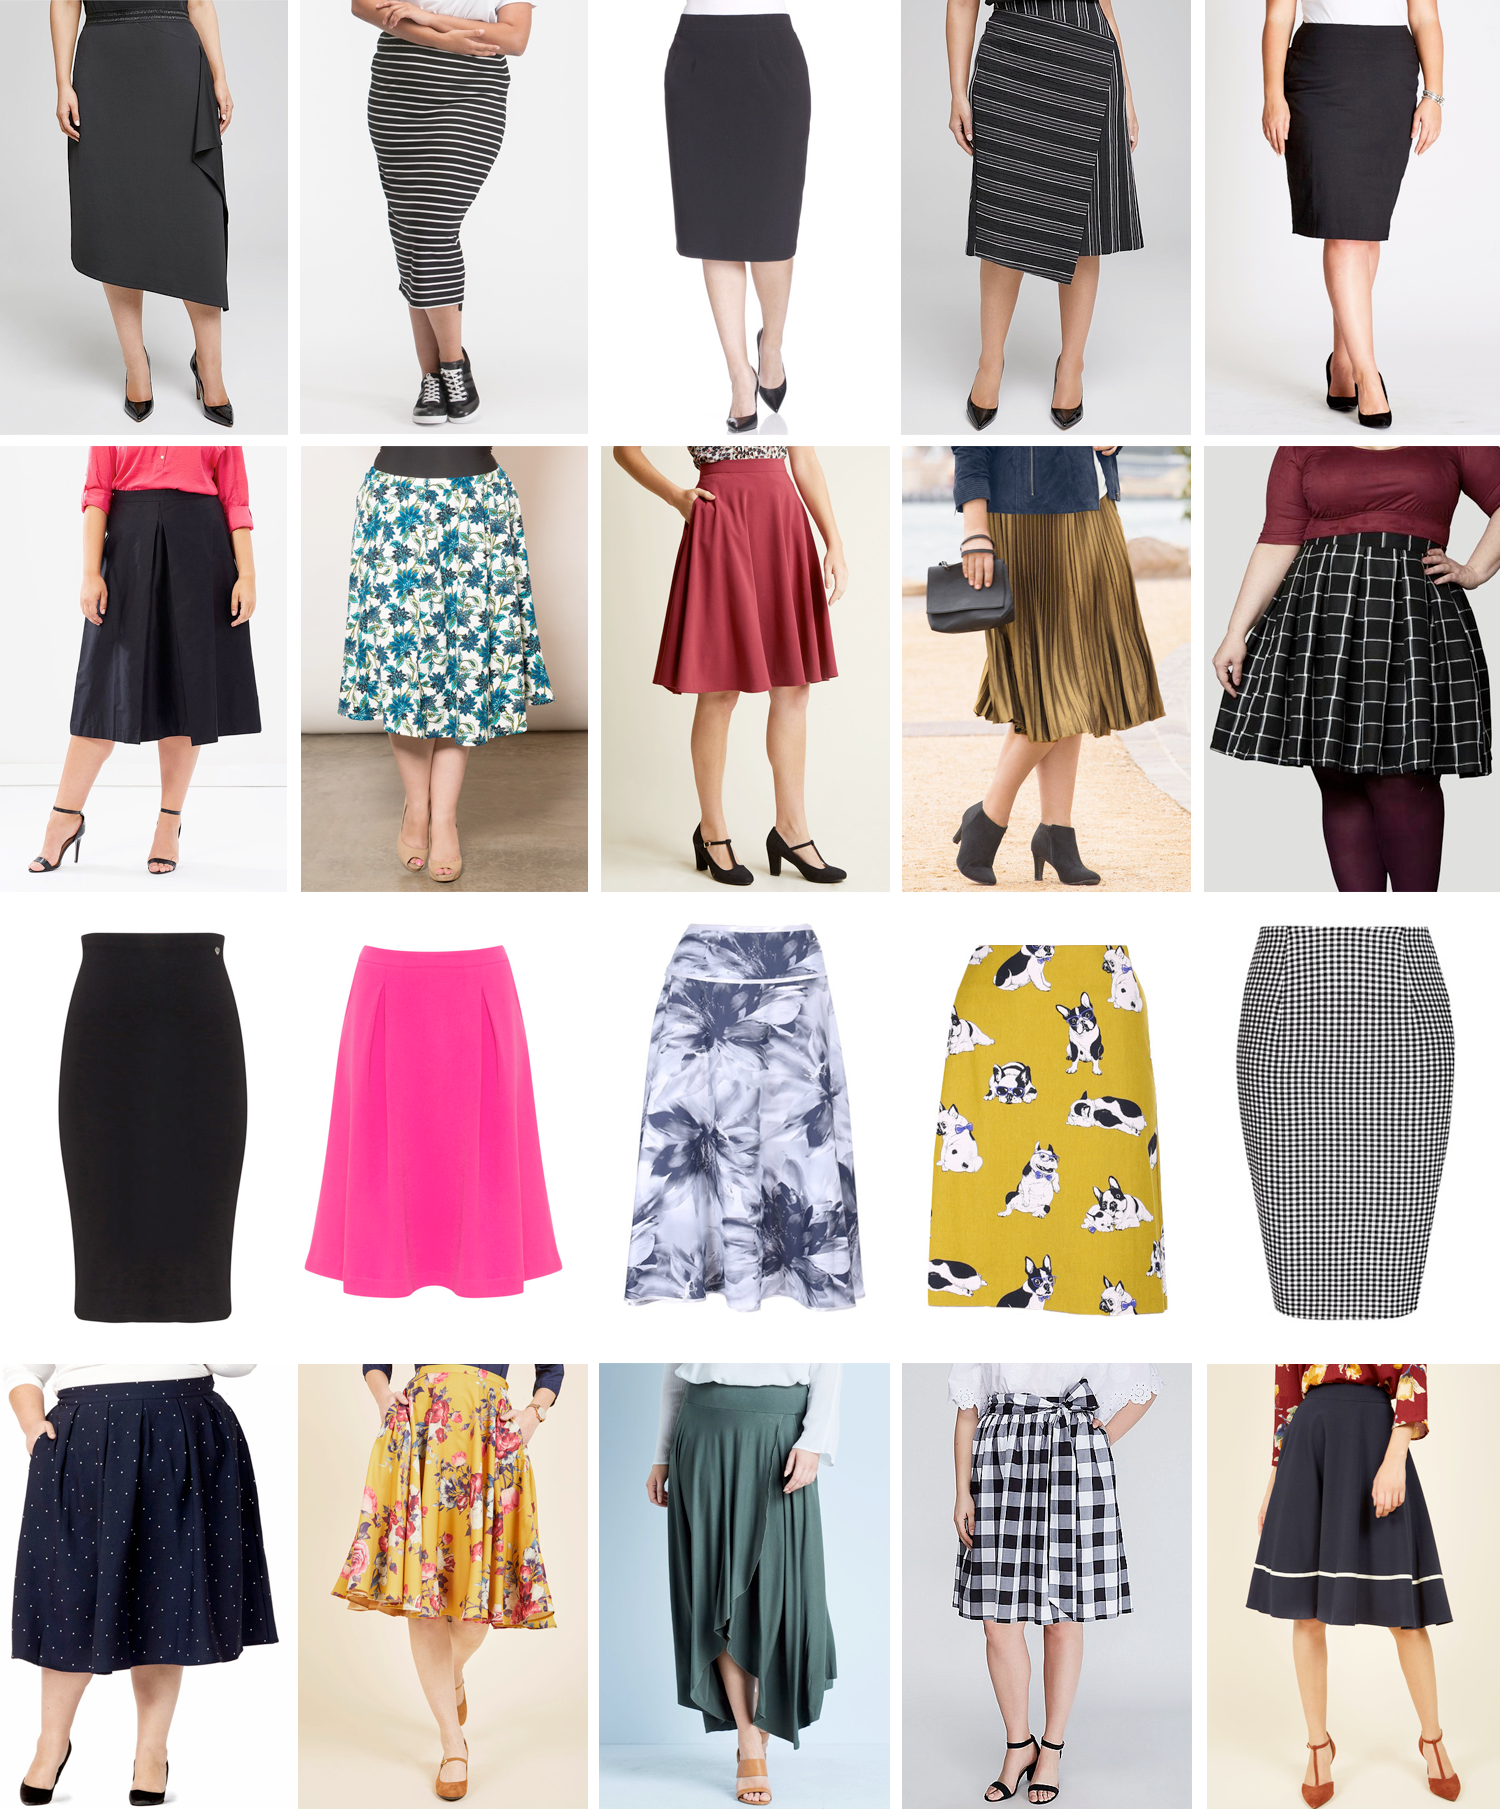 Plus size workwear skirts, officewear, midi skirts, pencil skirts, corporate wardrobe